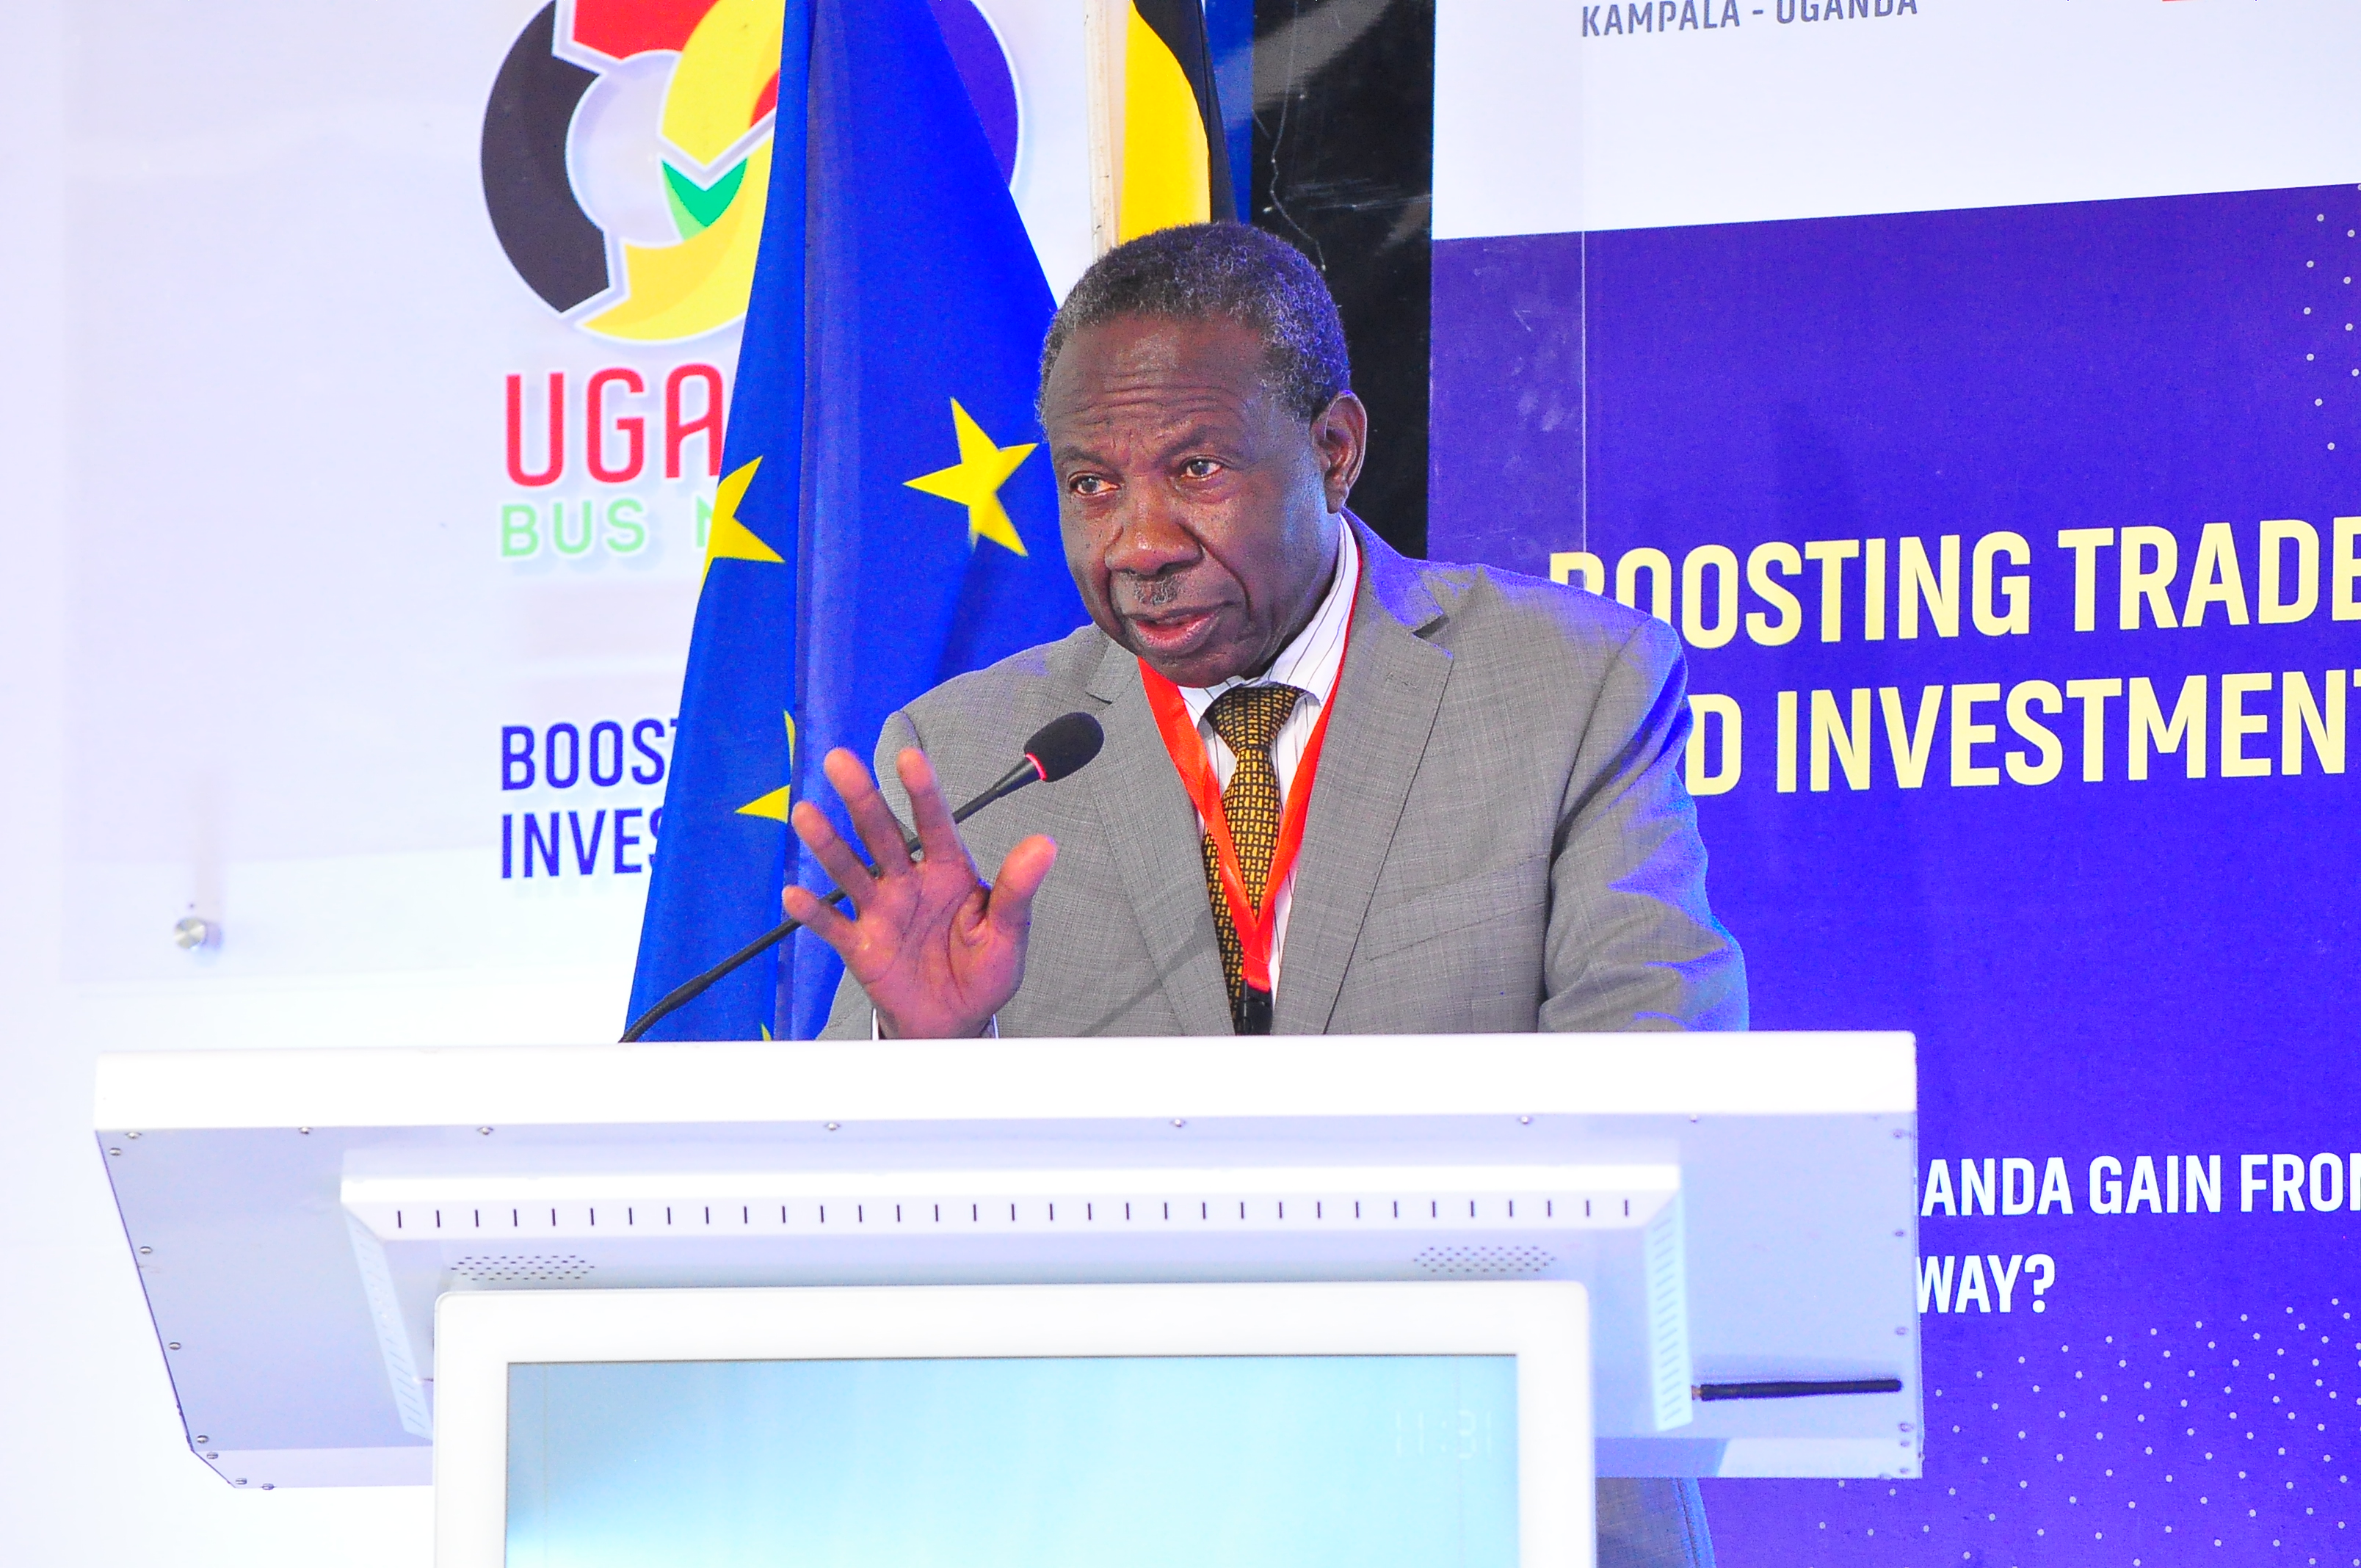 Finance Minister Kasaija at the 3rd Uganda-European Union Business Forum